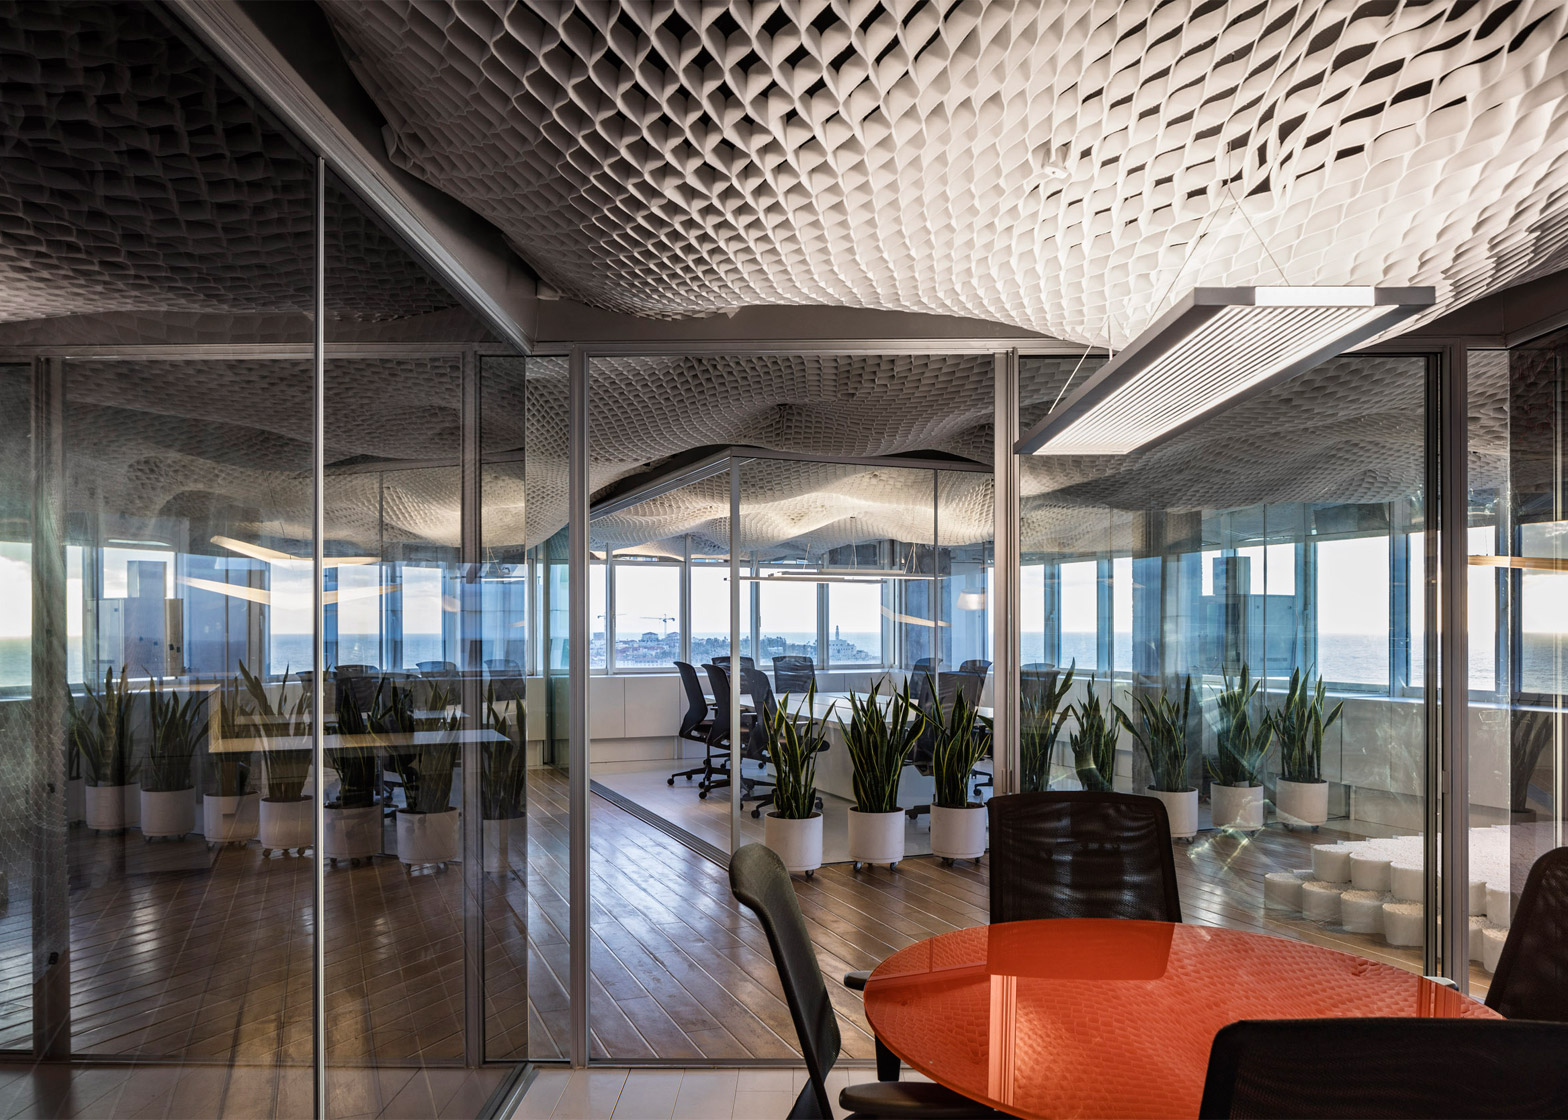 prs-offices-paritzki-liani-architects-interiors-ceiling-geo-cell-tel-aviv-israel-colour_dezeen_1568_1